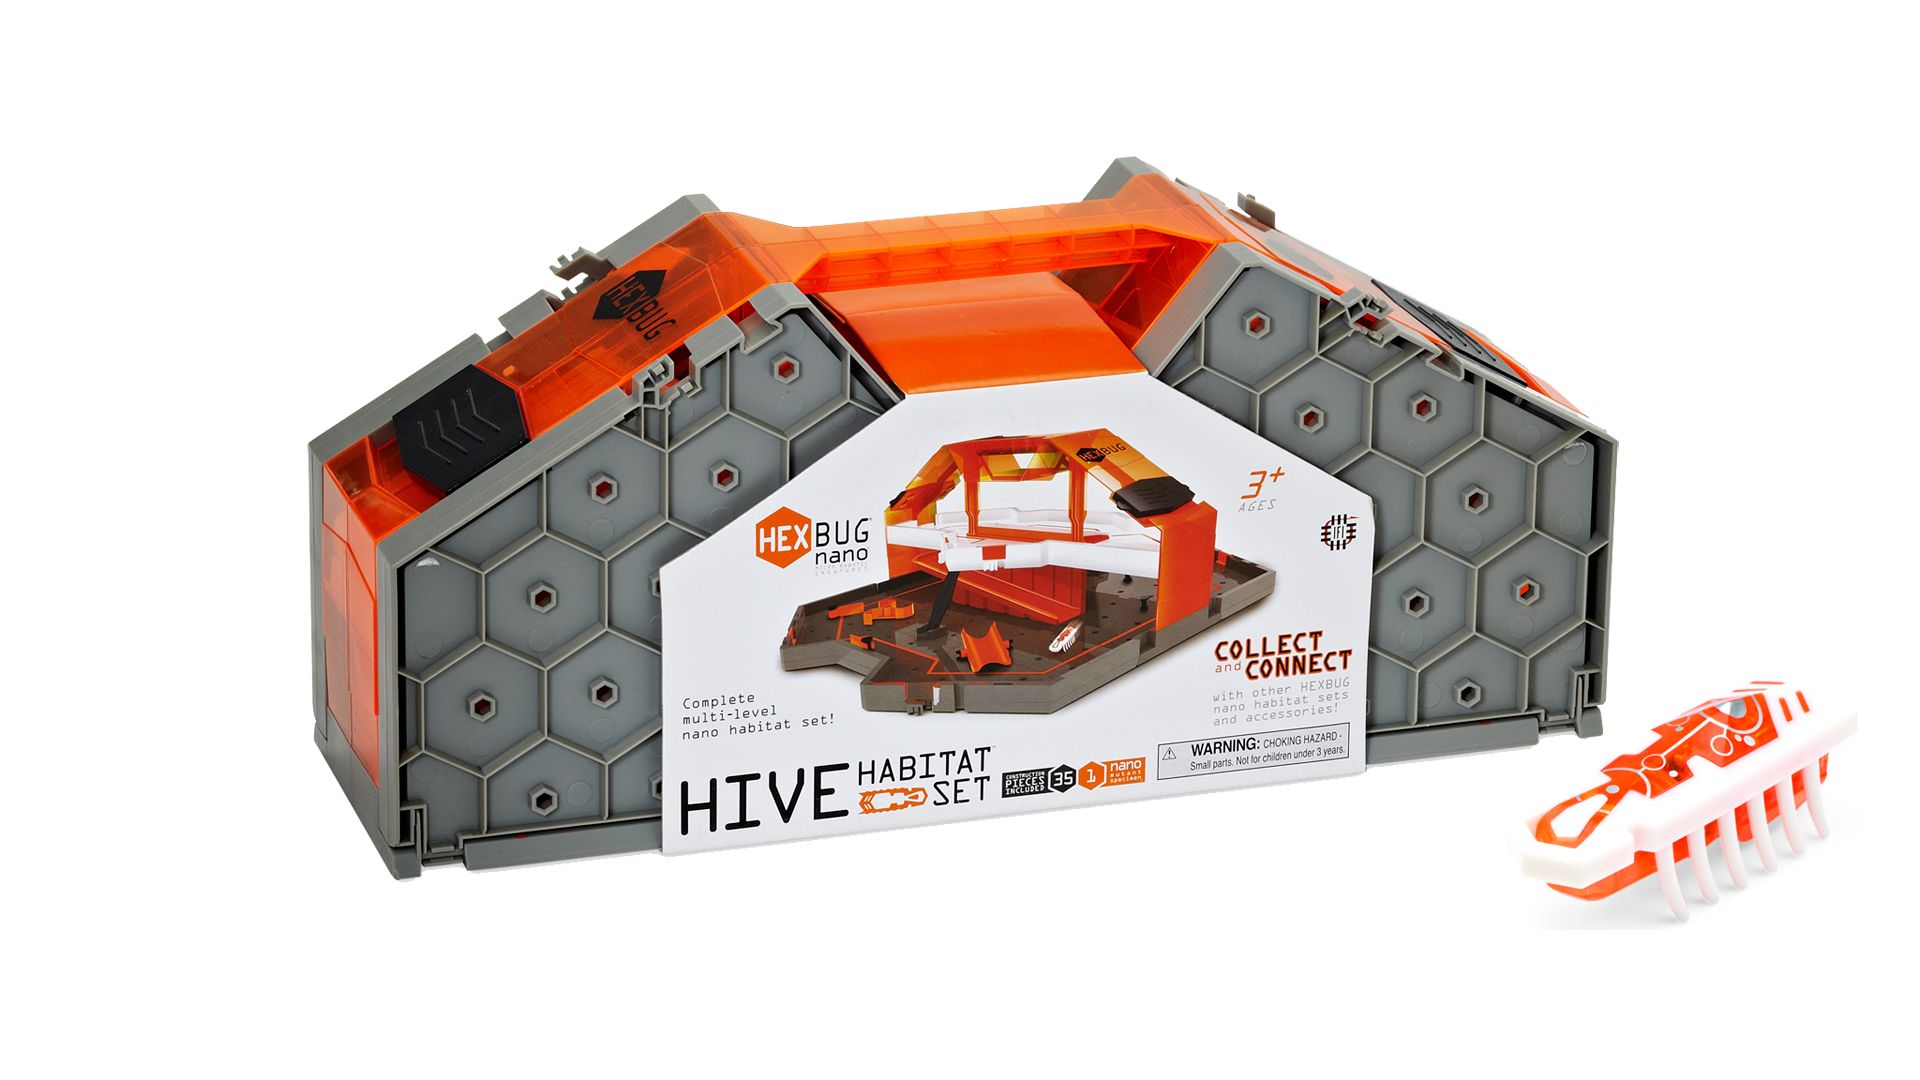 hexbug nano hive habitat set